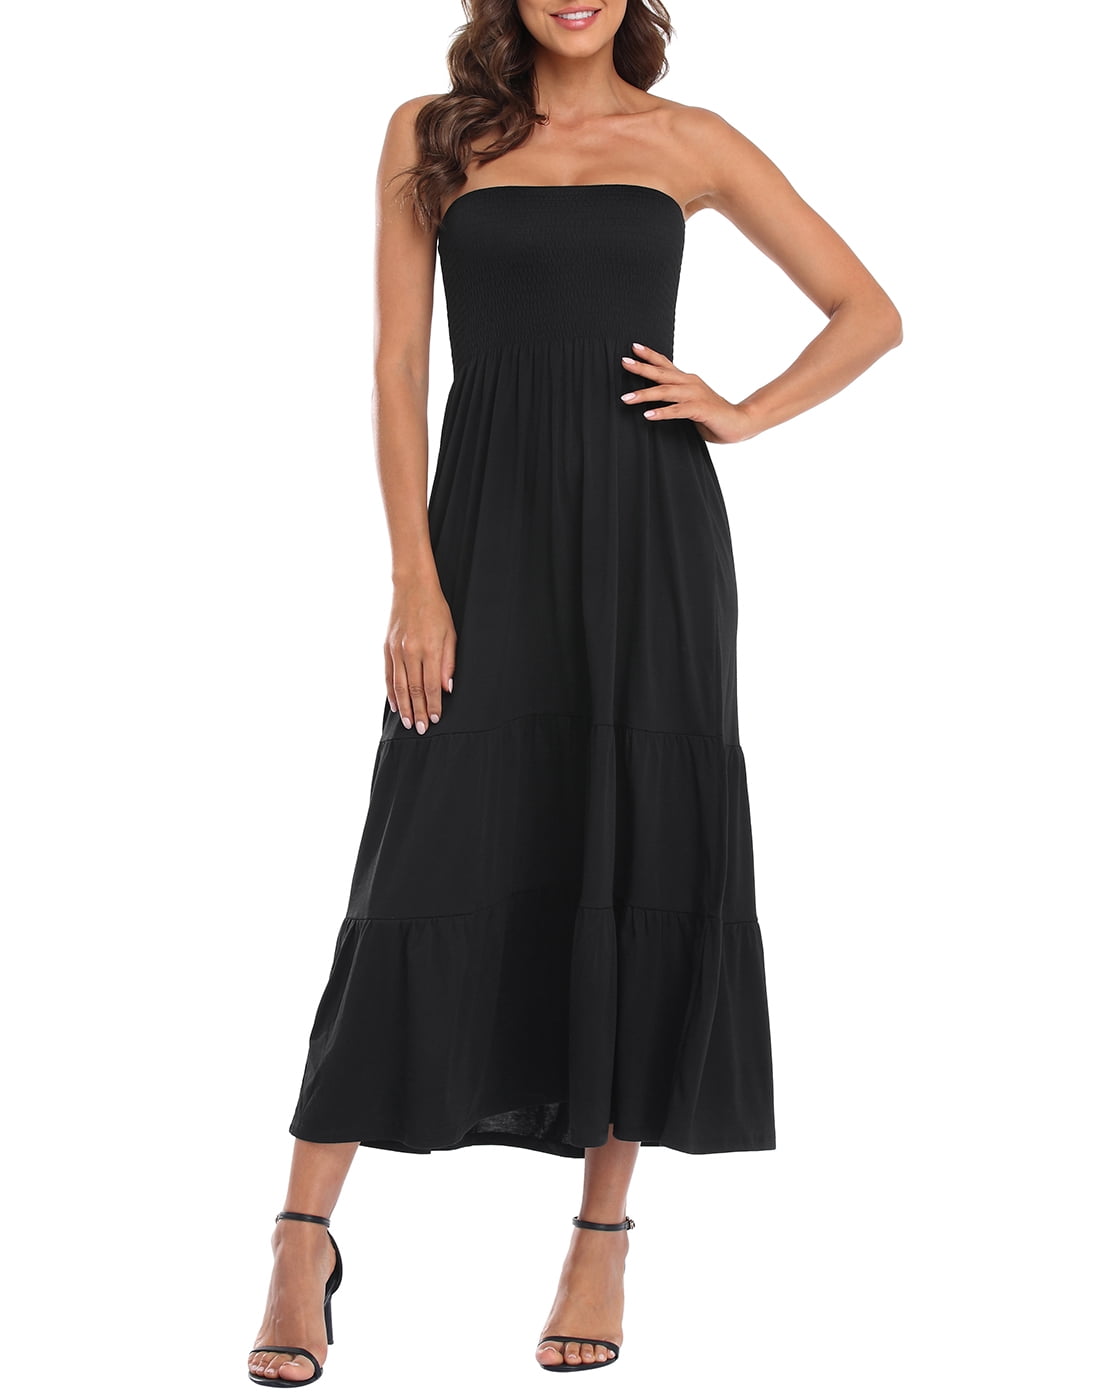 HDE Women's Strapless Maxi Dress Bohemian Sundress Black - L-XL ...